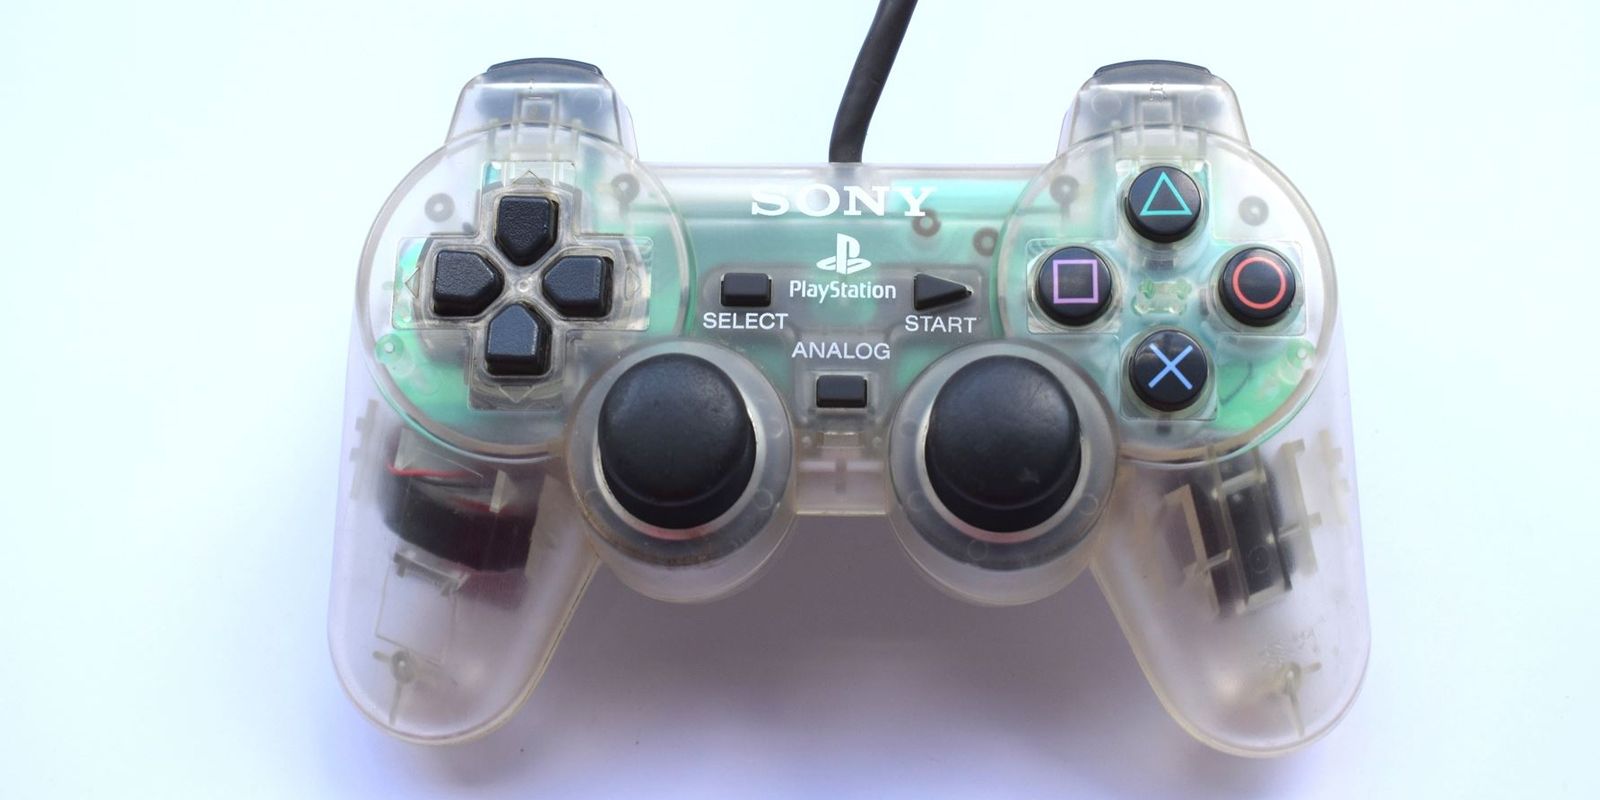 Playstation-DualShock-controller